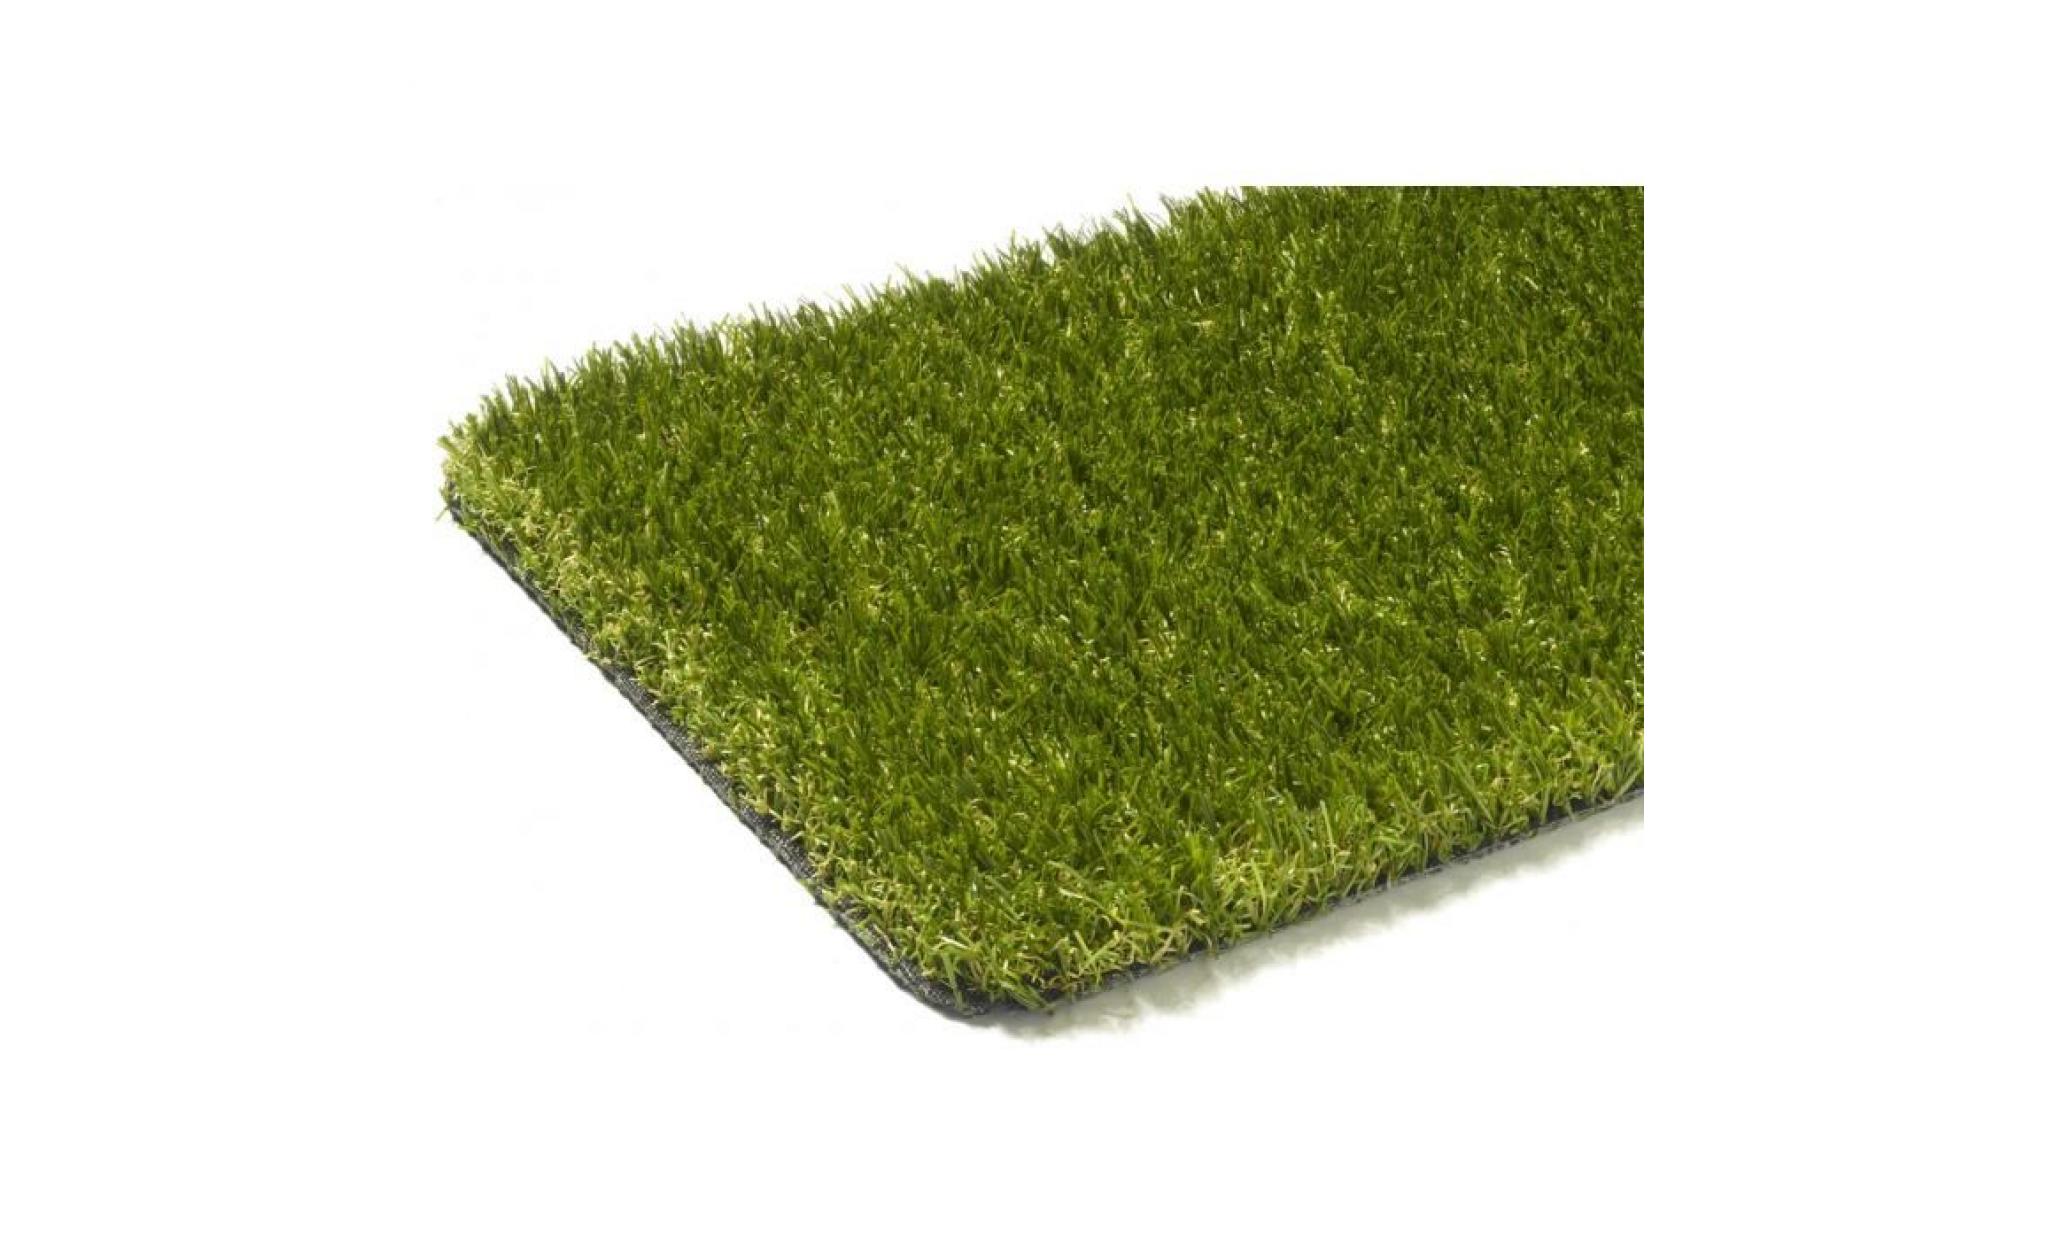 chelsea   tapis type luxe gazon artificiel – pour jardin, terrasse, balcon   vert  [200x500 cm]